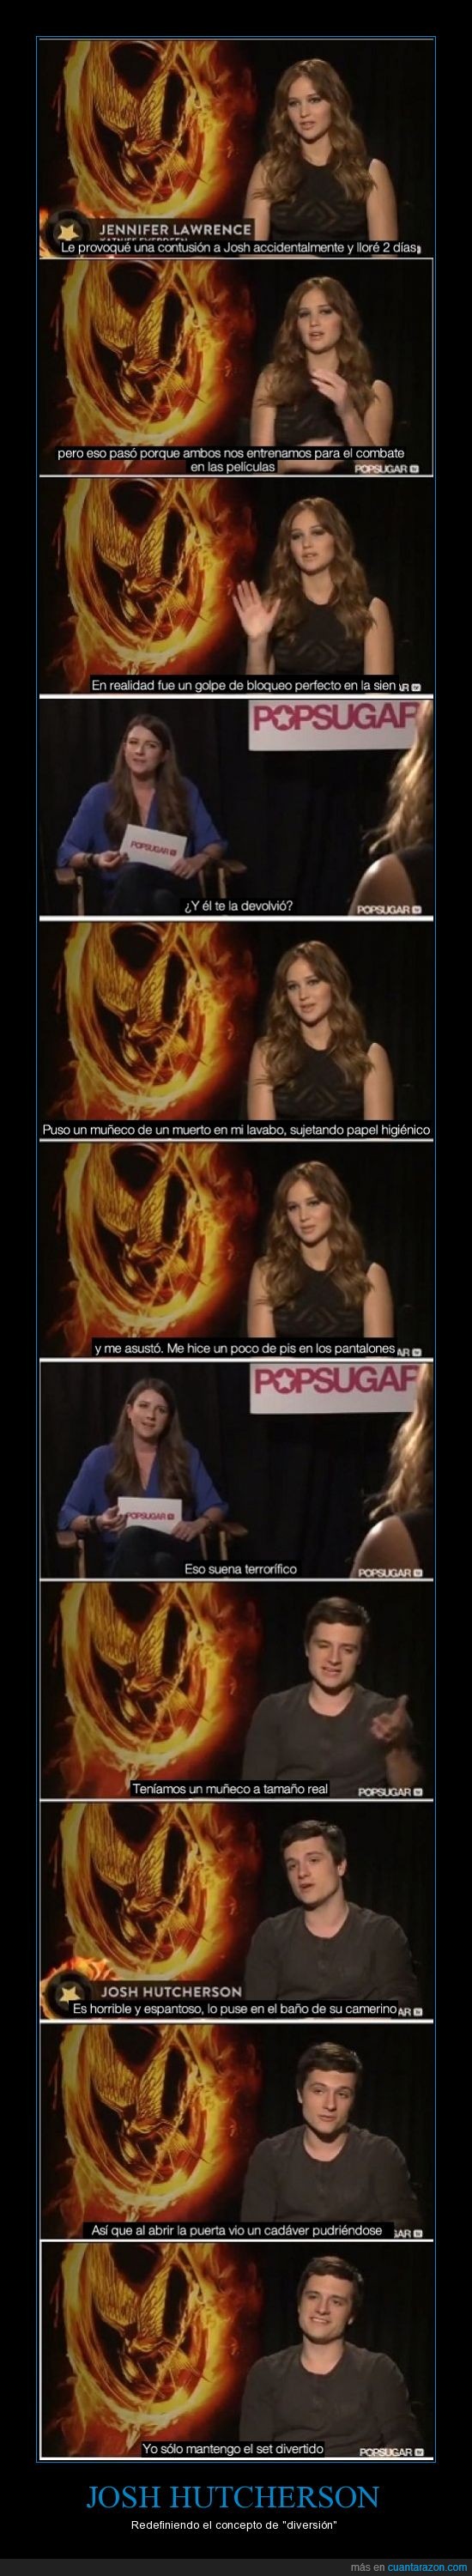 Jennifer Lawrence,The Hunger Games,Tuve que reducir la imagen veinte veces porque no terminaba de carga,Cruel,Broma,Josh Hutcherson